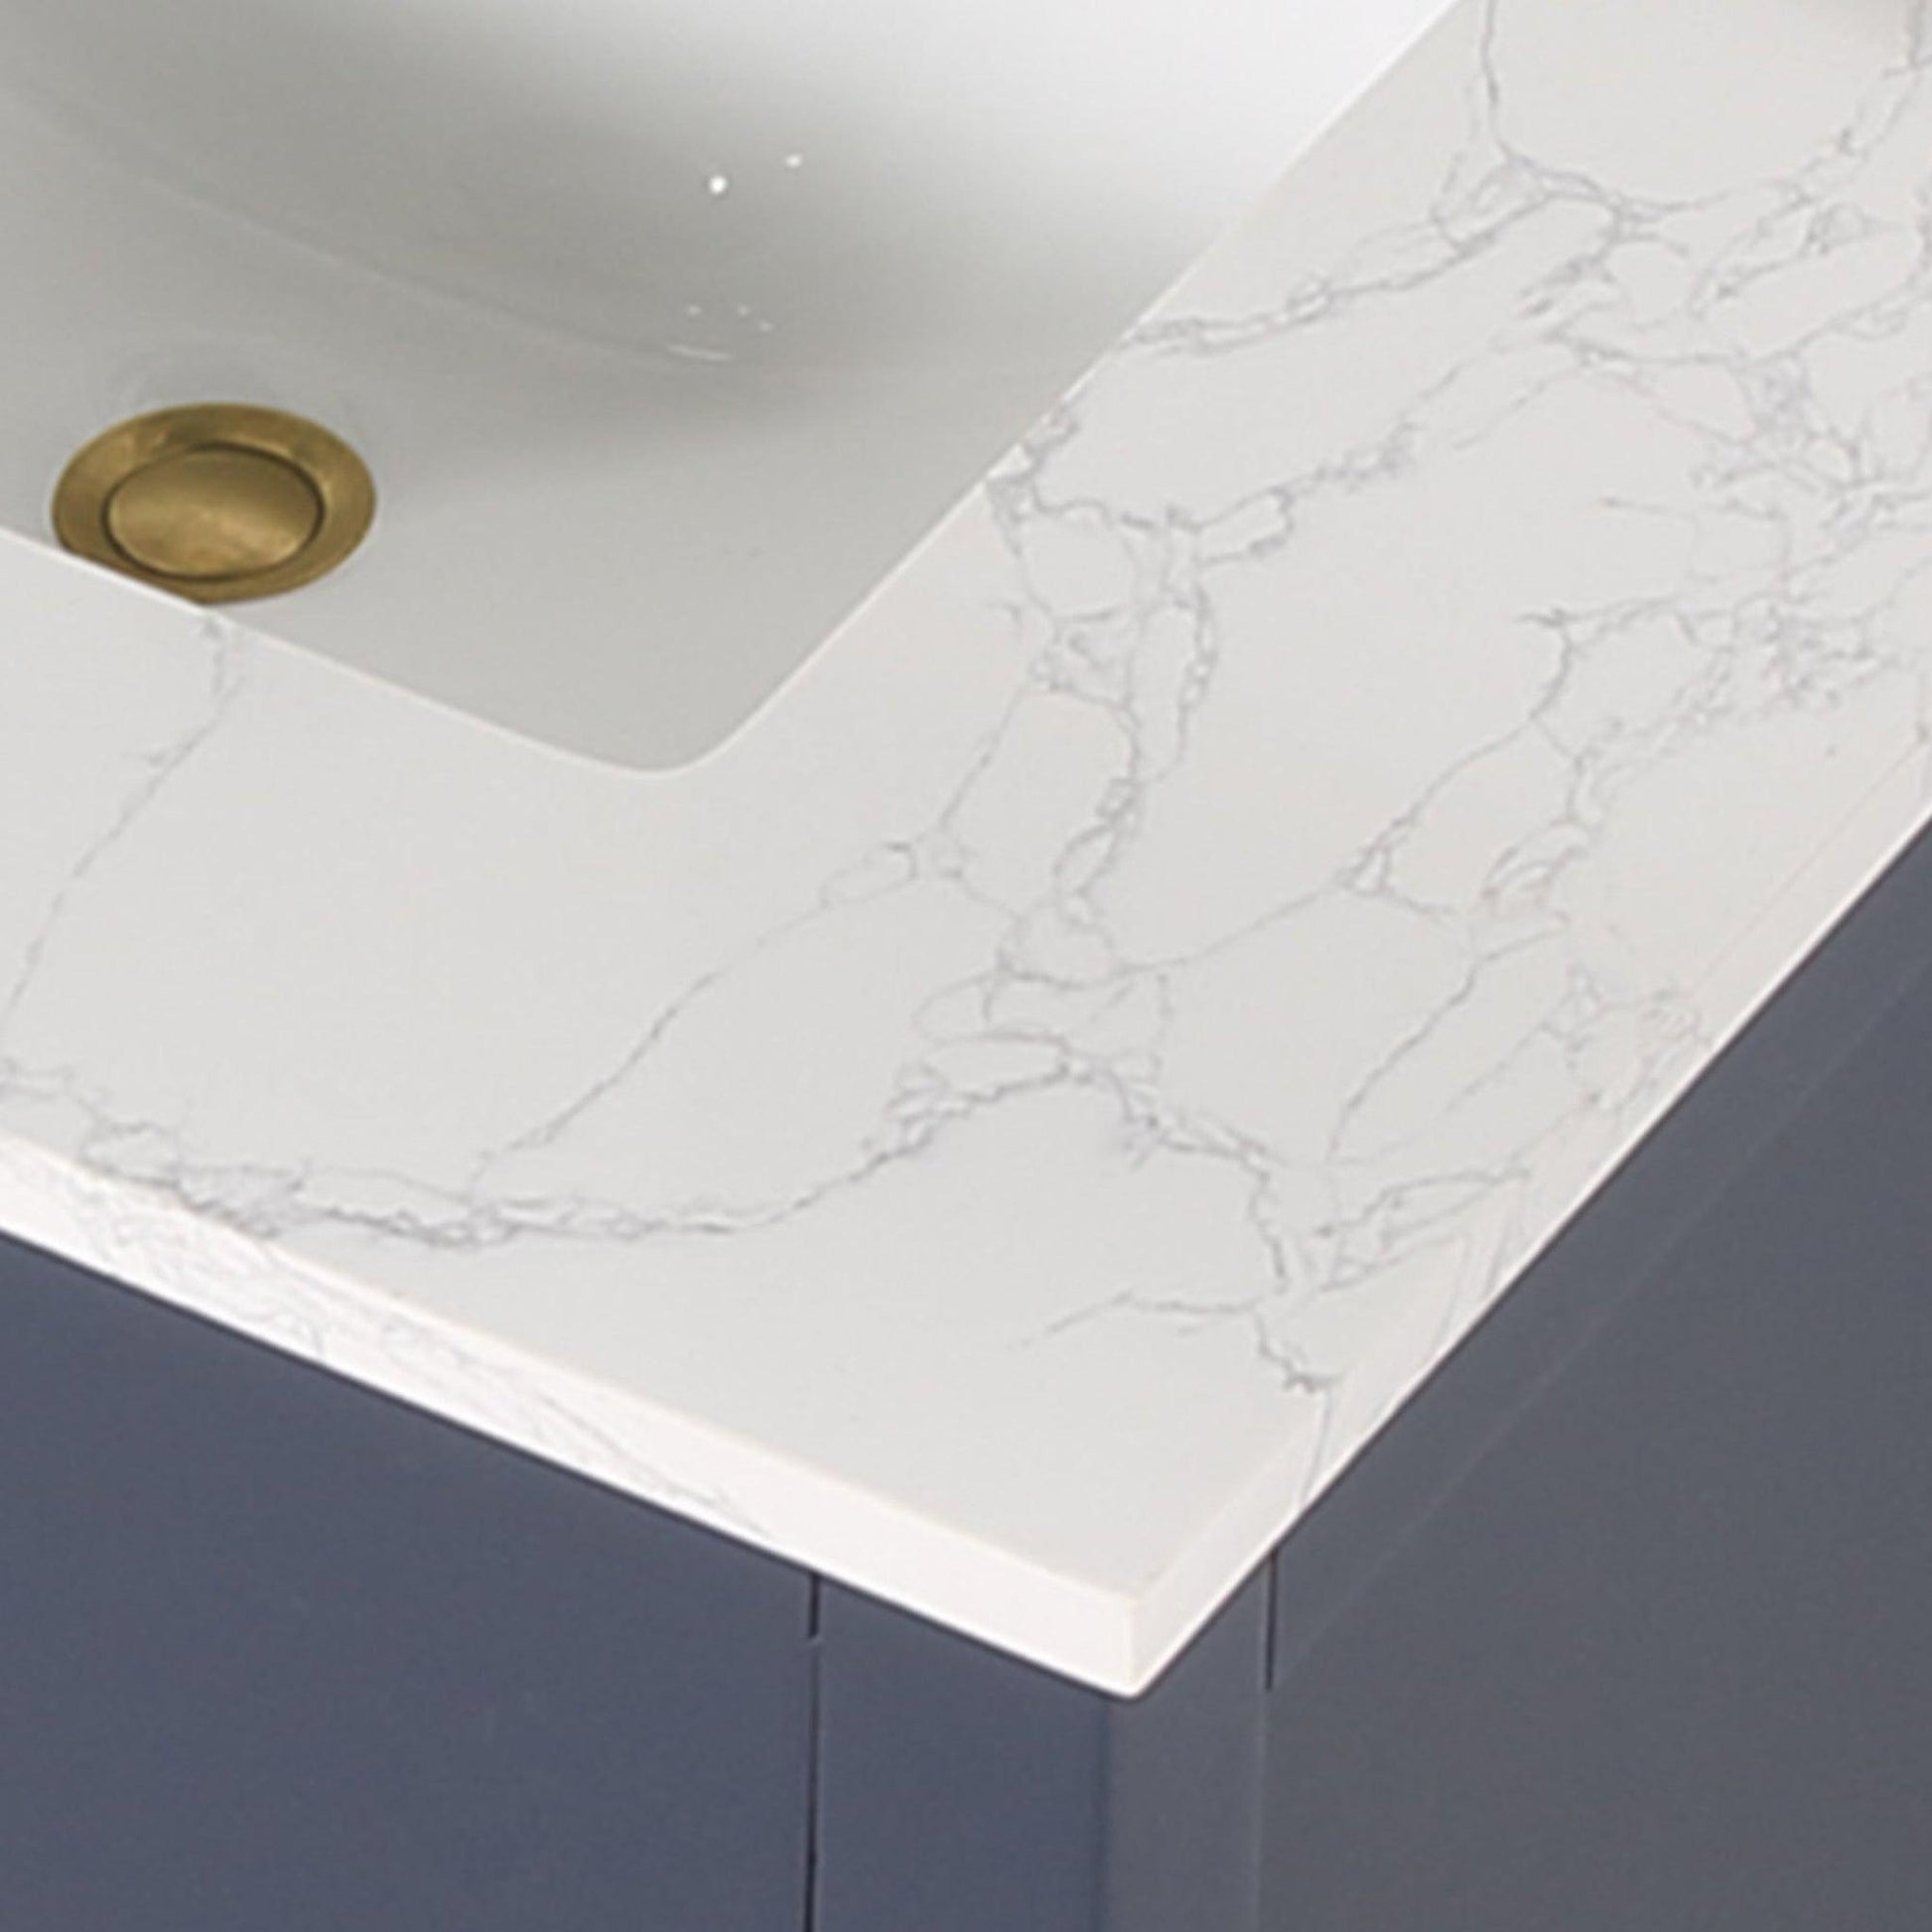 Altair Gavino 30" Royal Blue Freestanding Single Bathroom Vanity Set With Mirror, Grain White Composite Stone Top, Single Rectangular Undermount Ceramic Sink, Overflow, Sidesplash, and Backsplash